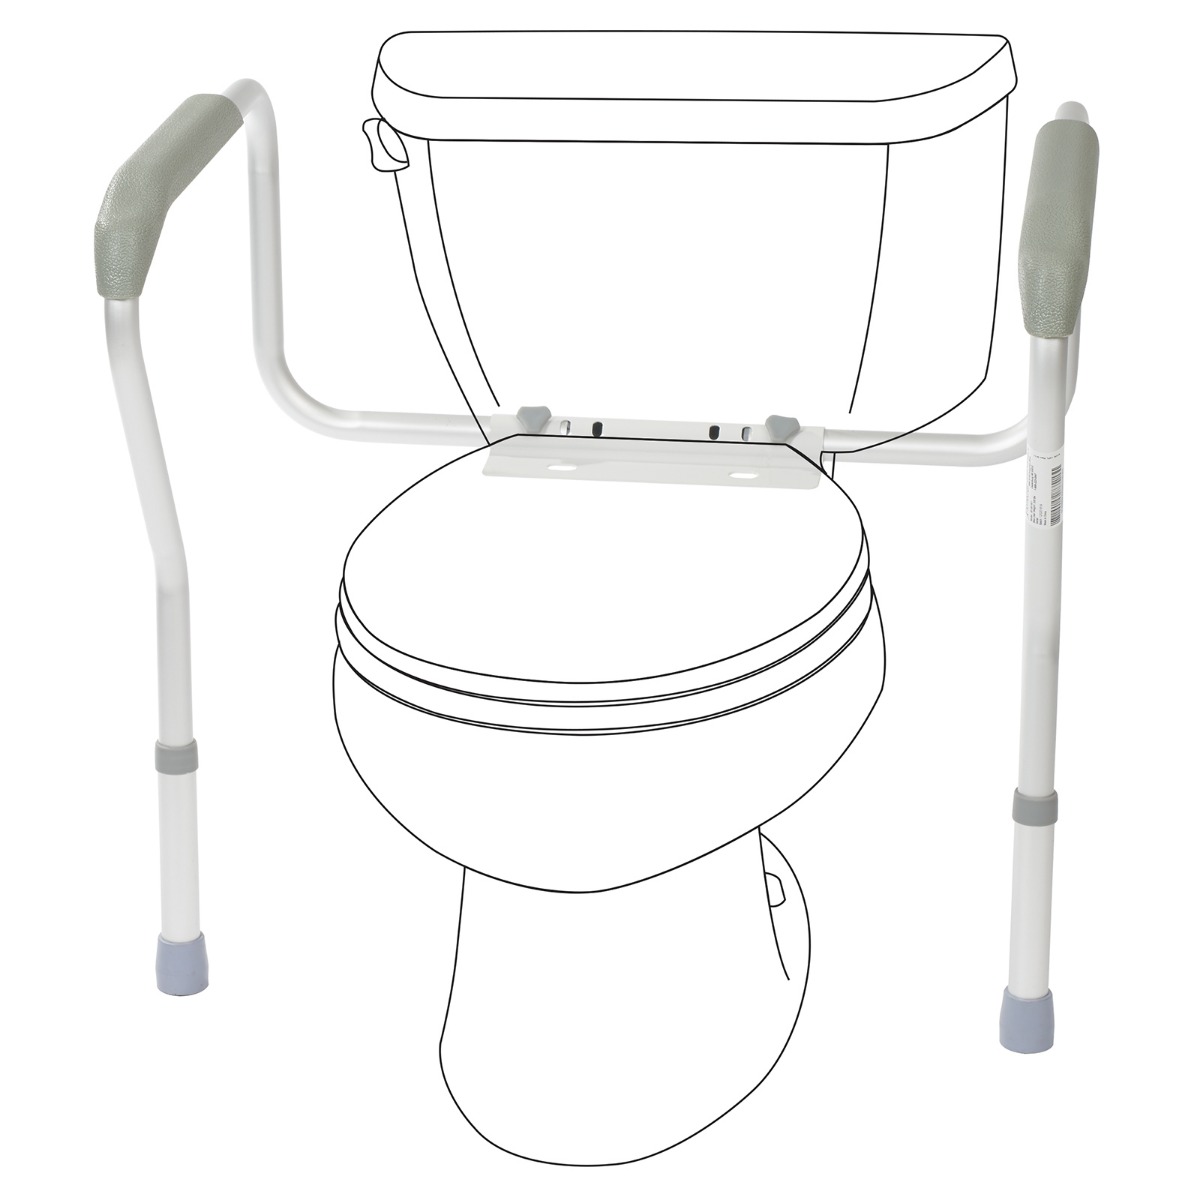 Homecraft Toilet Safety Frame